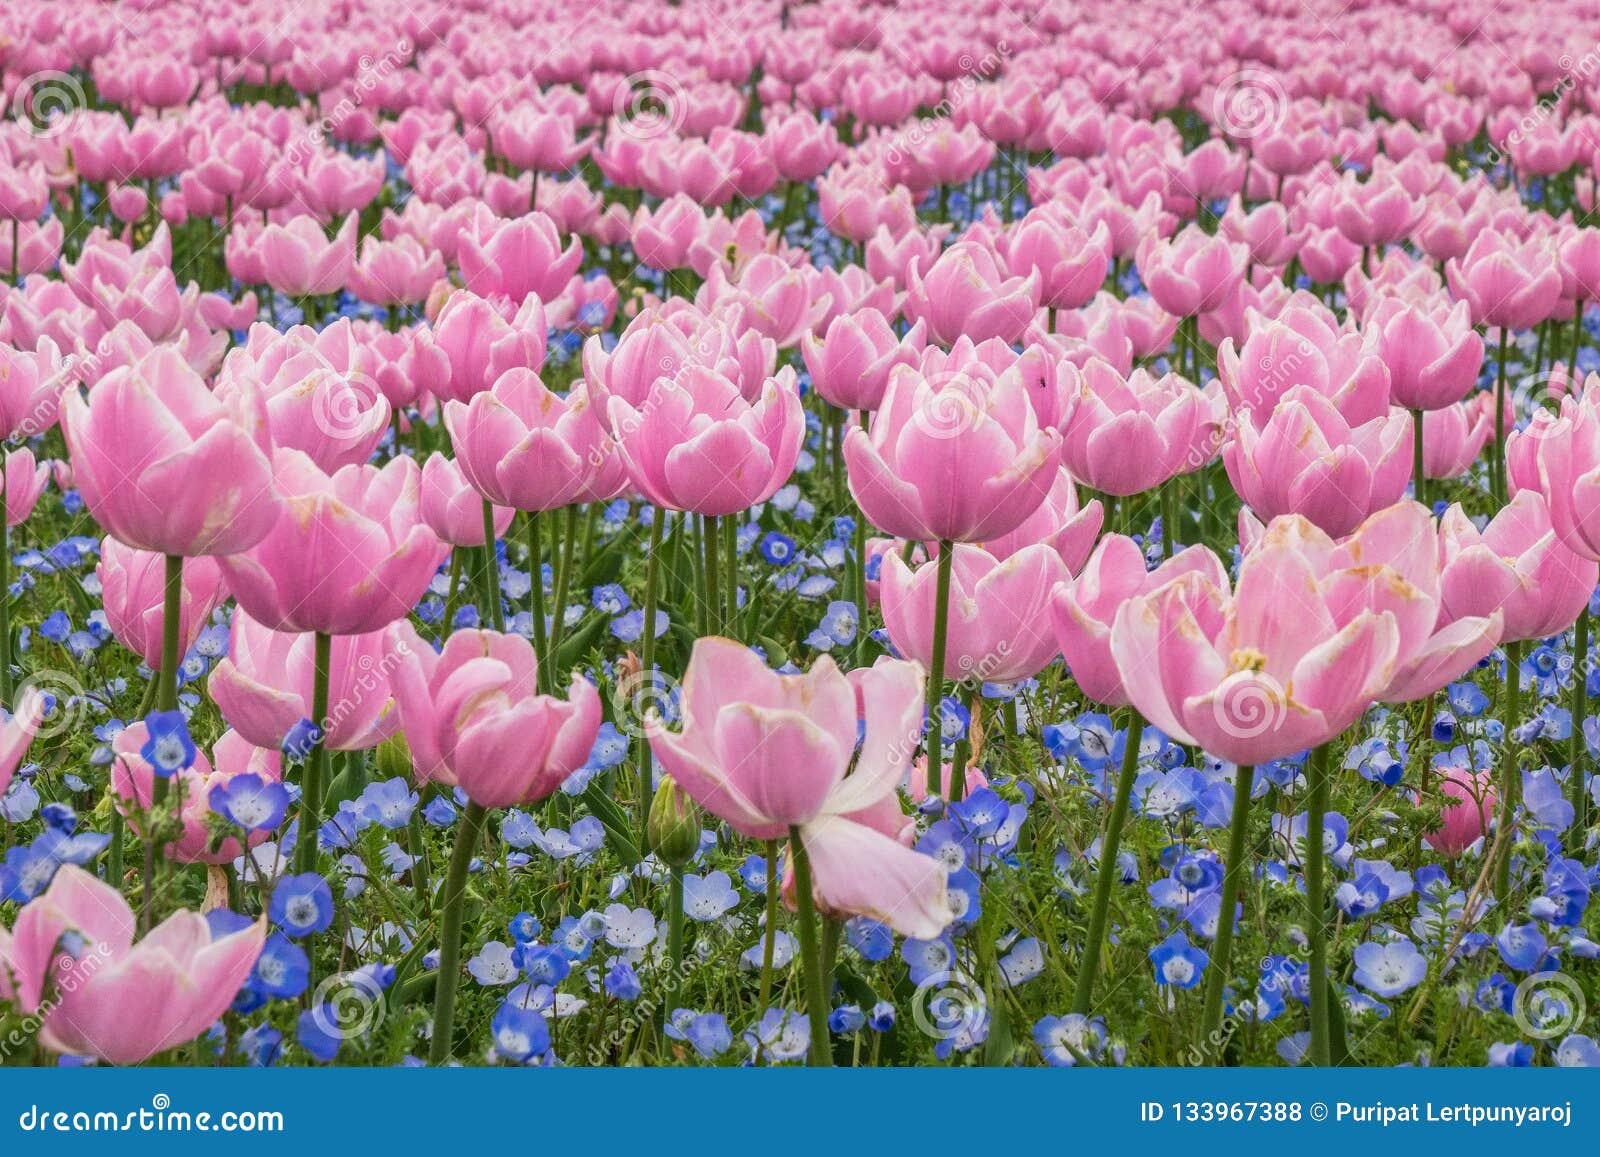 tulip field in nabana no sato garden, japan stock photo - image of